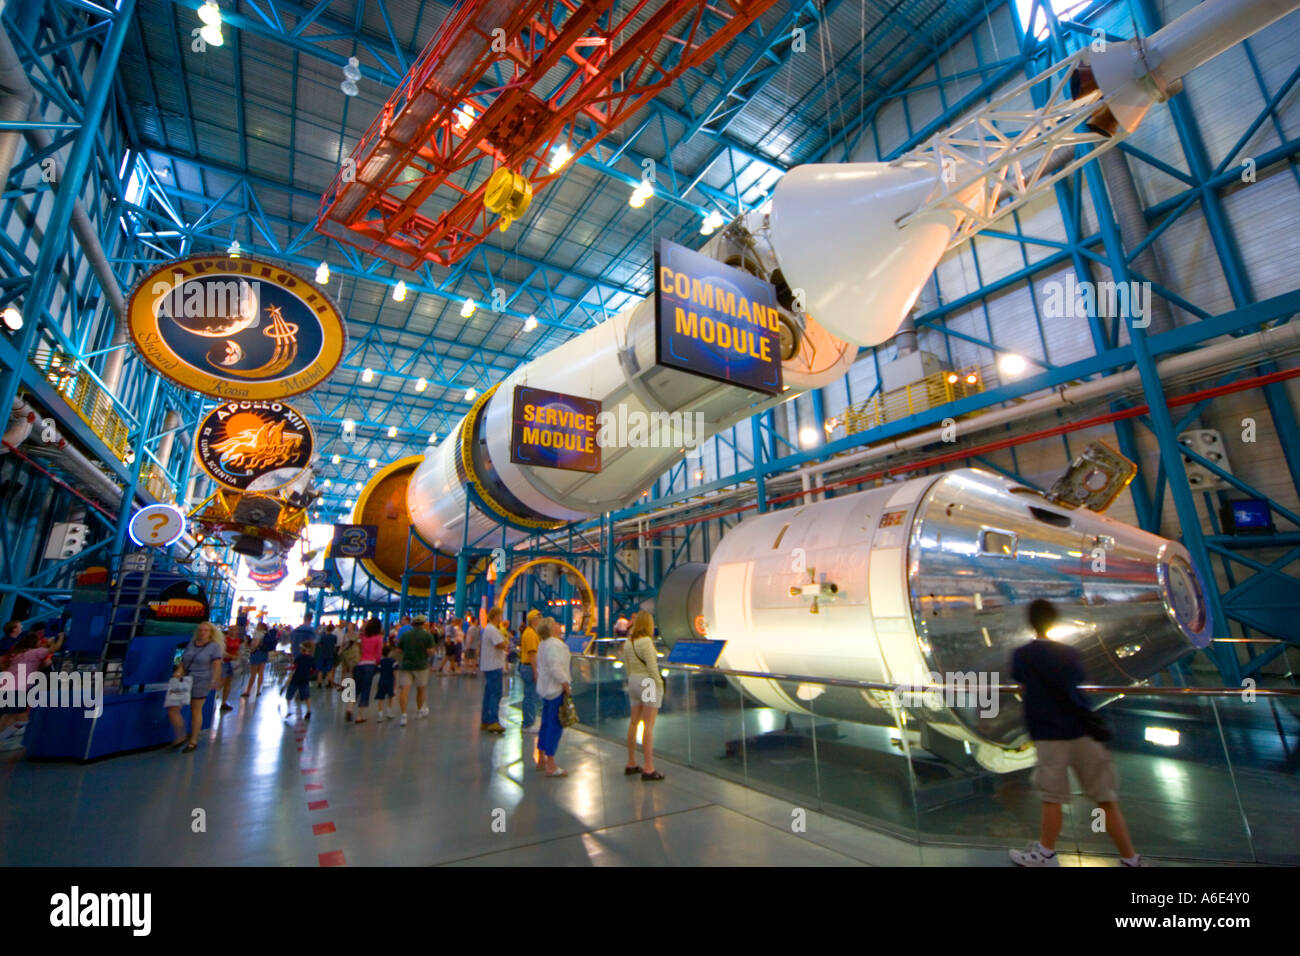 NASA John F Kennedy Space Center Cape Canaveral Florida USA JMH1235 Stock Photo